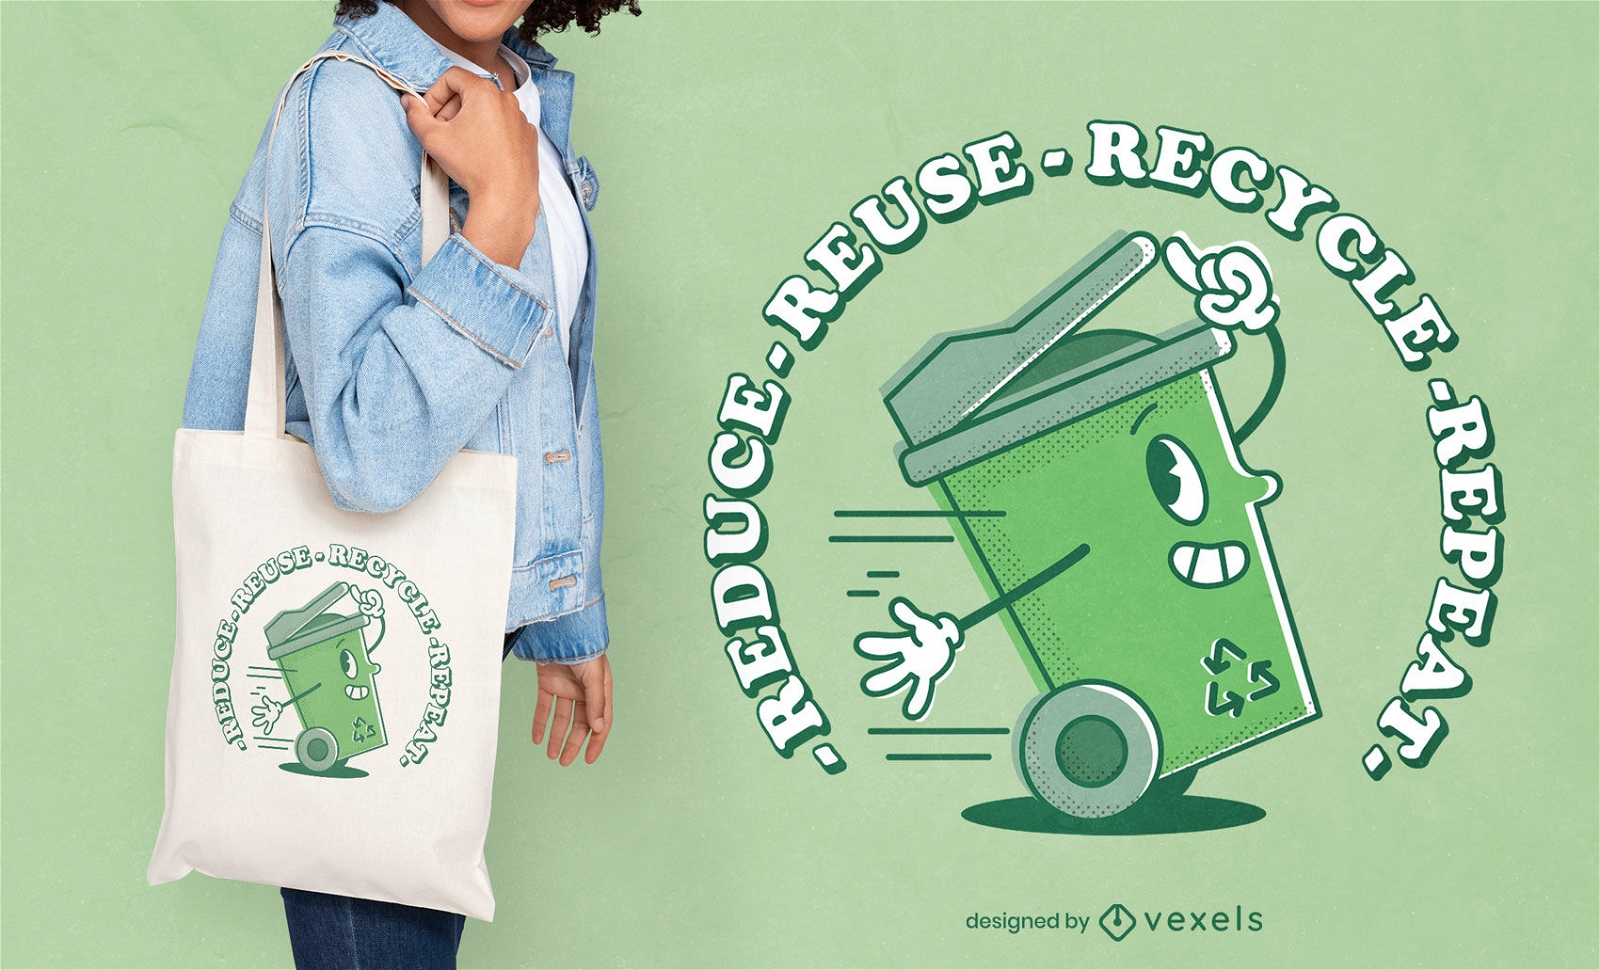 Dise?o de bolso de mano de reciclaje ecol?gico